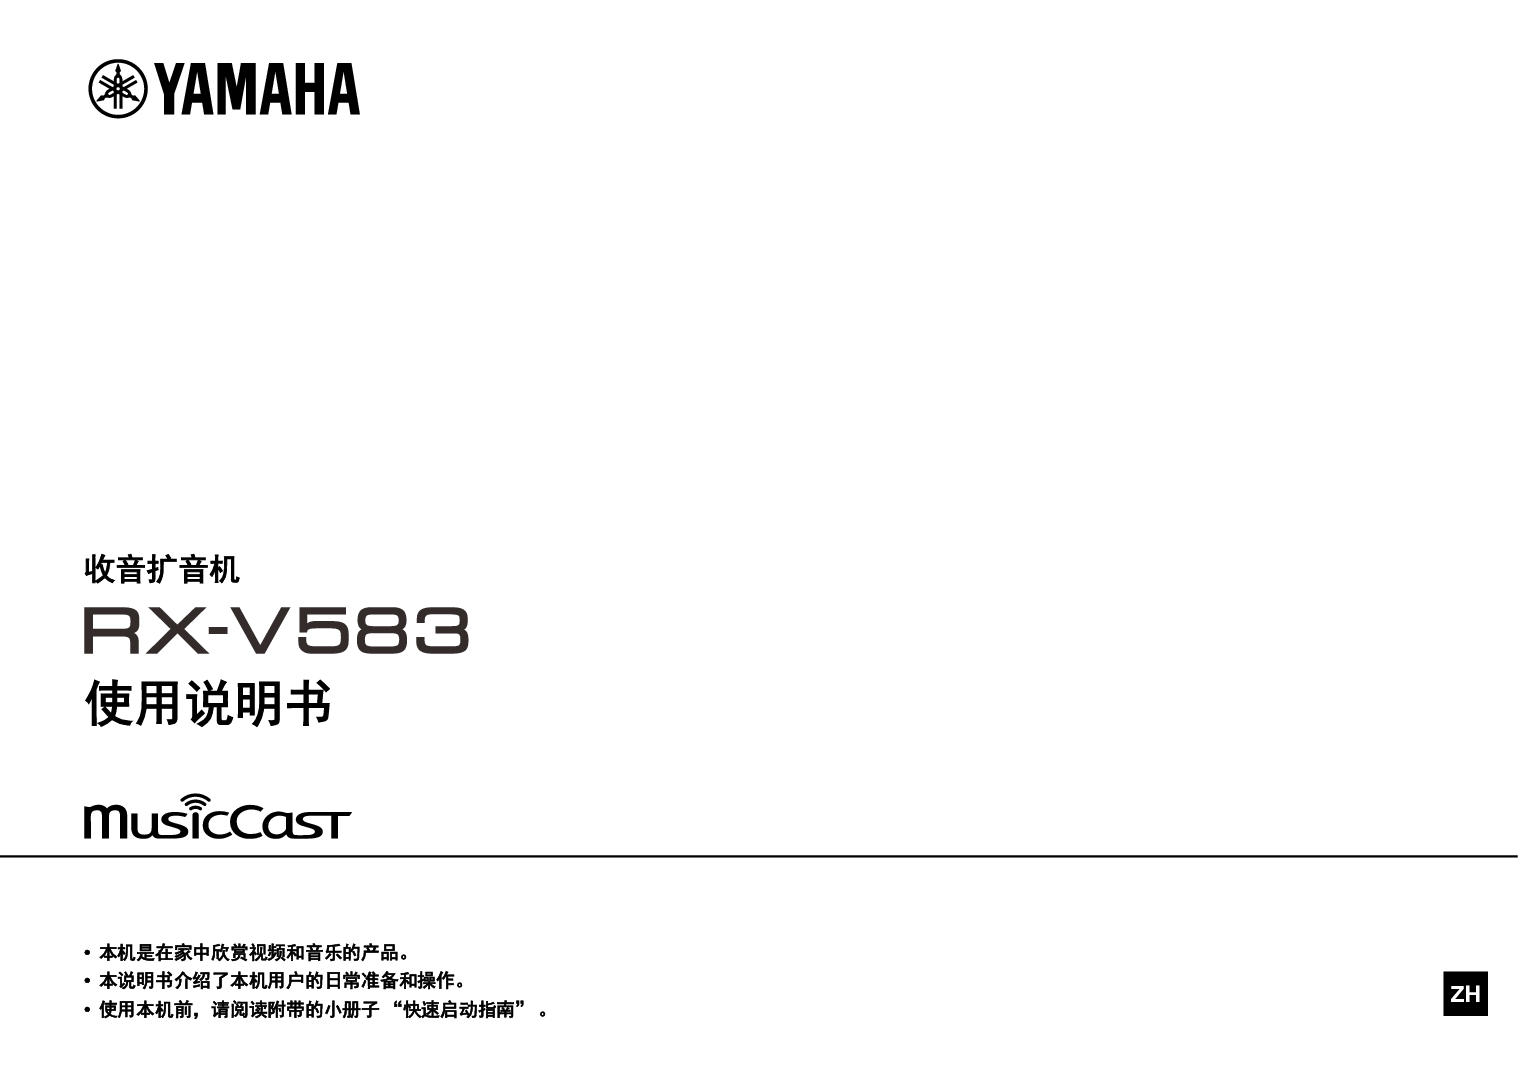 雅马哈 Yamaha RX-V583 使用说明书 封面